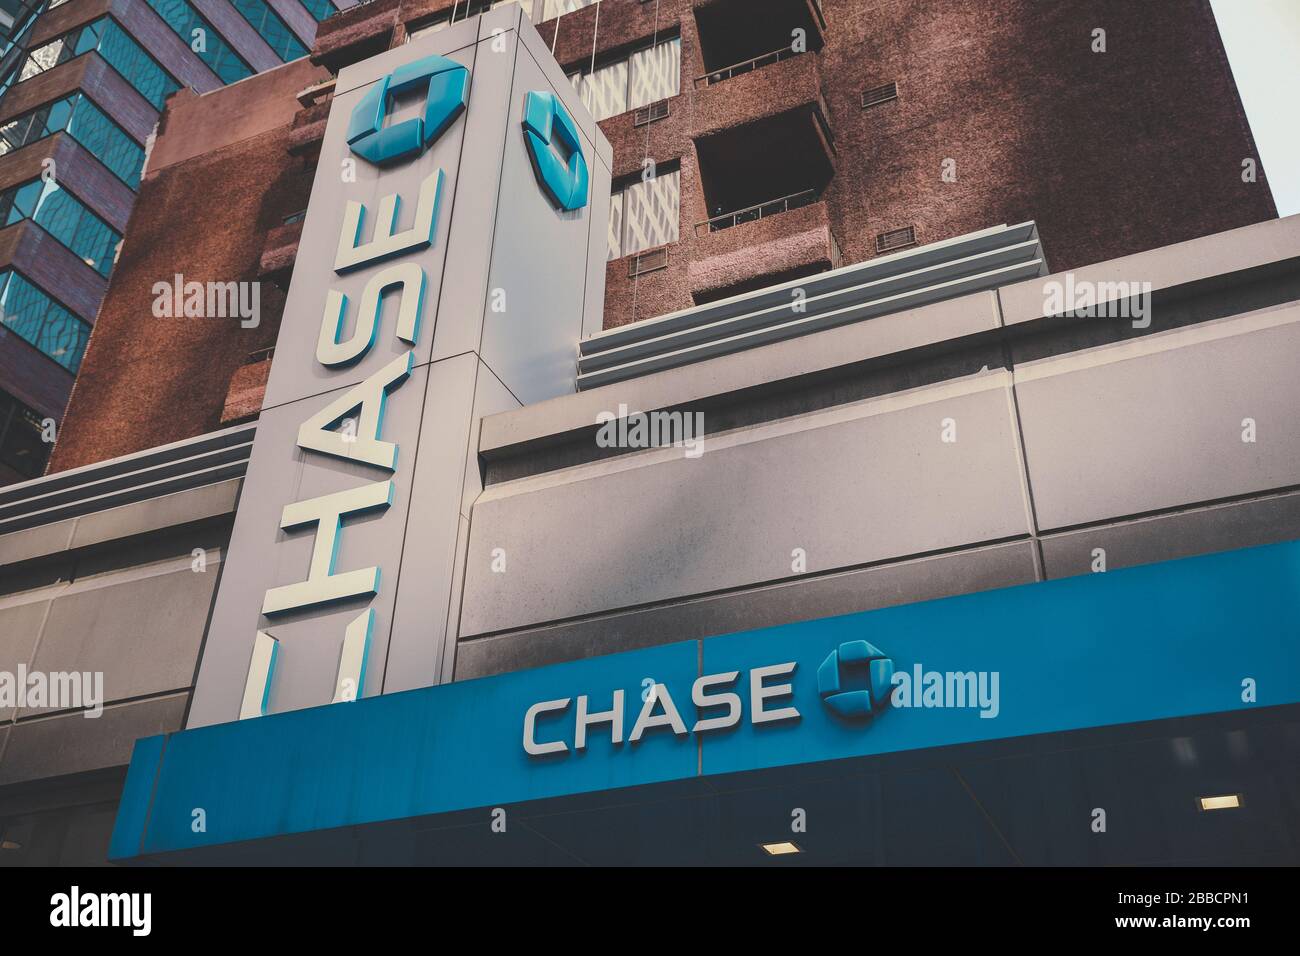 Chase Manhattan Bank Stock Photos Chase Manhattan Bank Stock